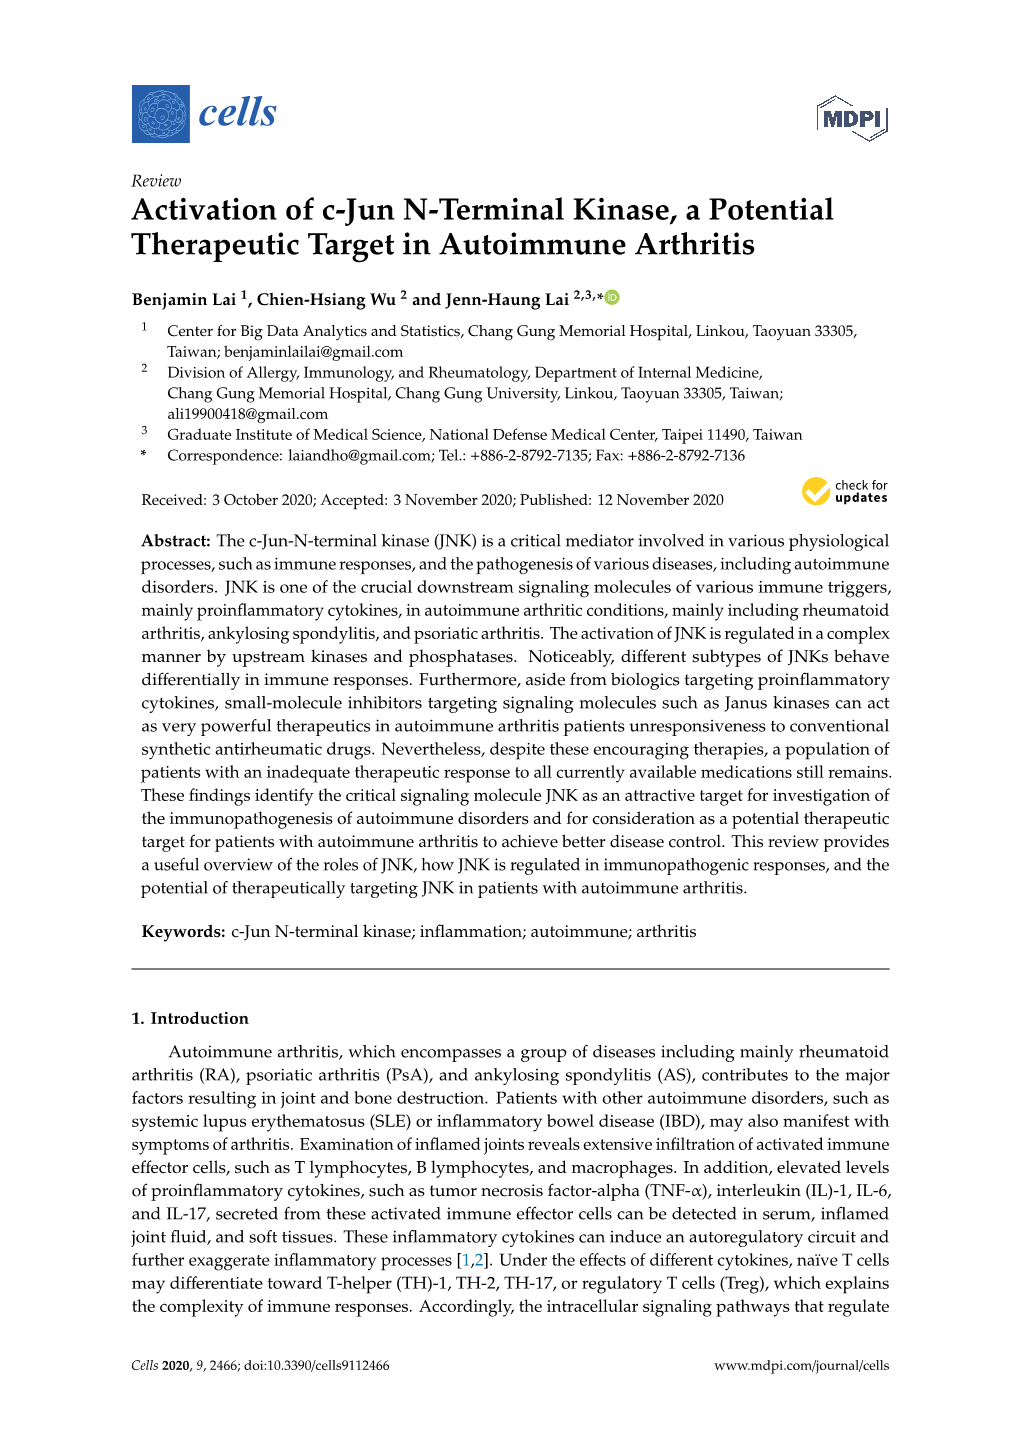 Activation of C-Jun N-Terminal Kinase, a Potential Therapeutic Target in Autoimmune Arthritis